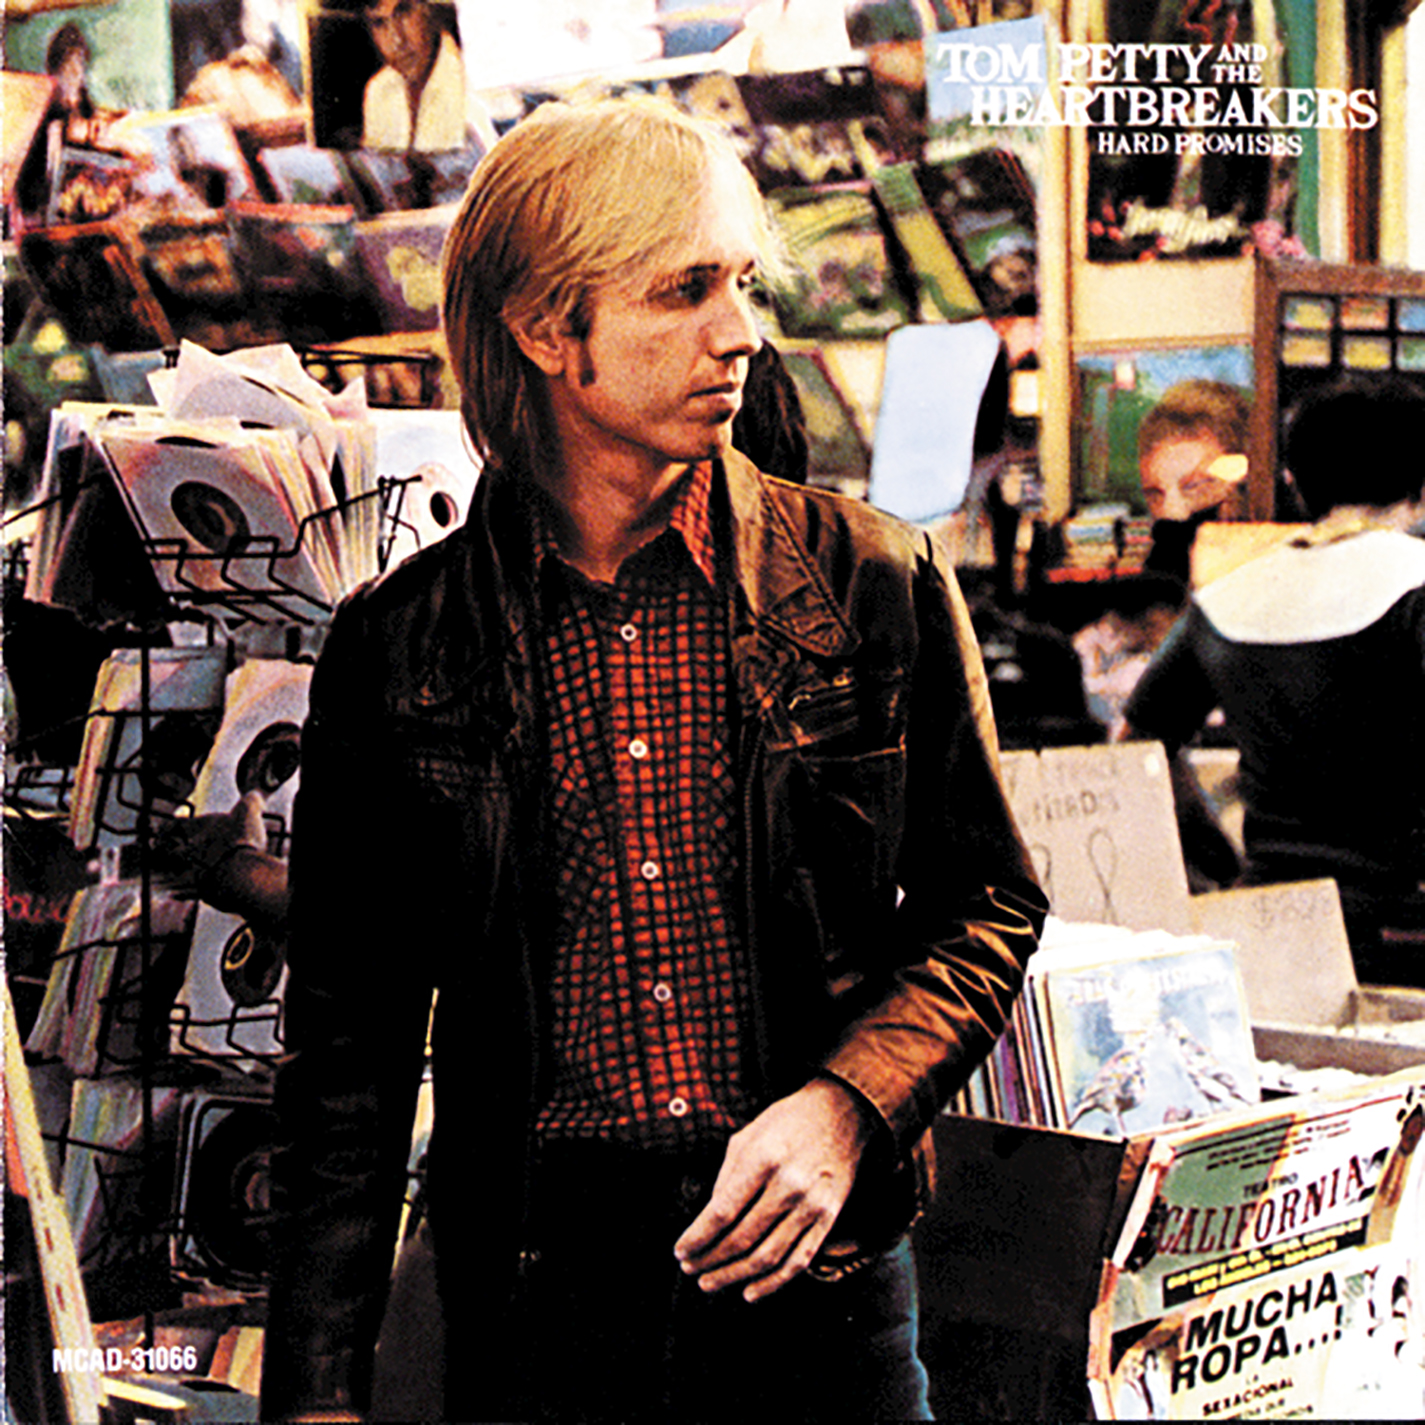 Tom Petty & The Heartbreakers - 1981 - Hard Promises [2015] 24-96